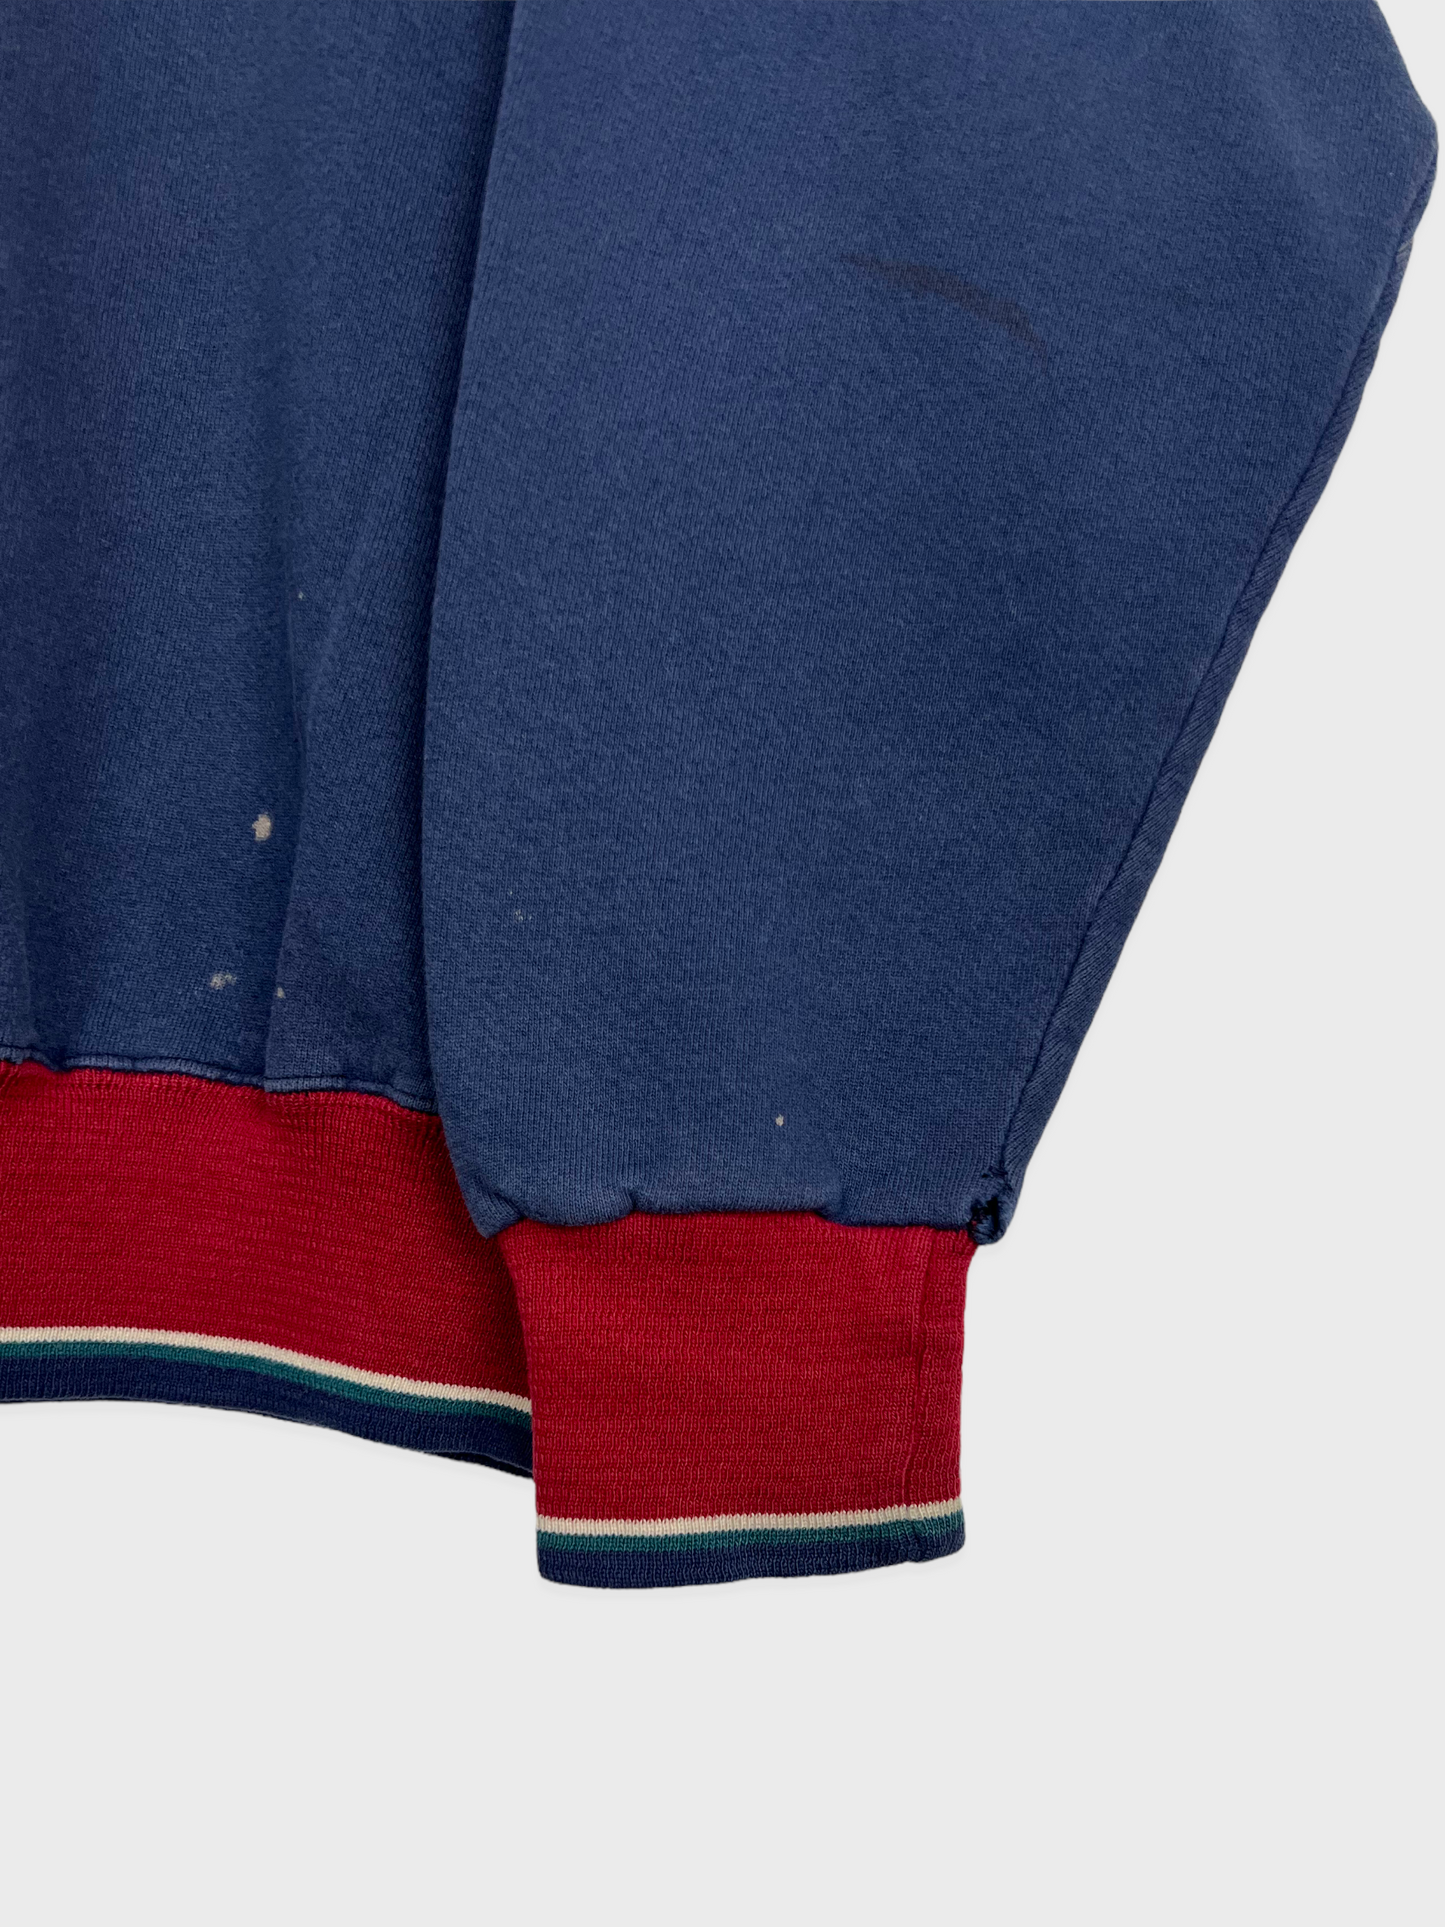 90's Legends Baseball USA Made Embroidered Vintage Sweatshirt Size M-L